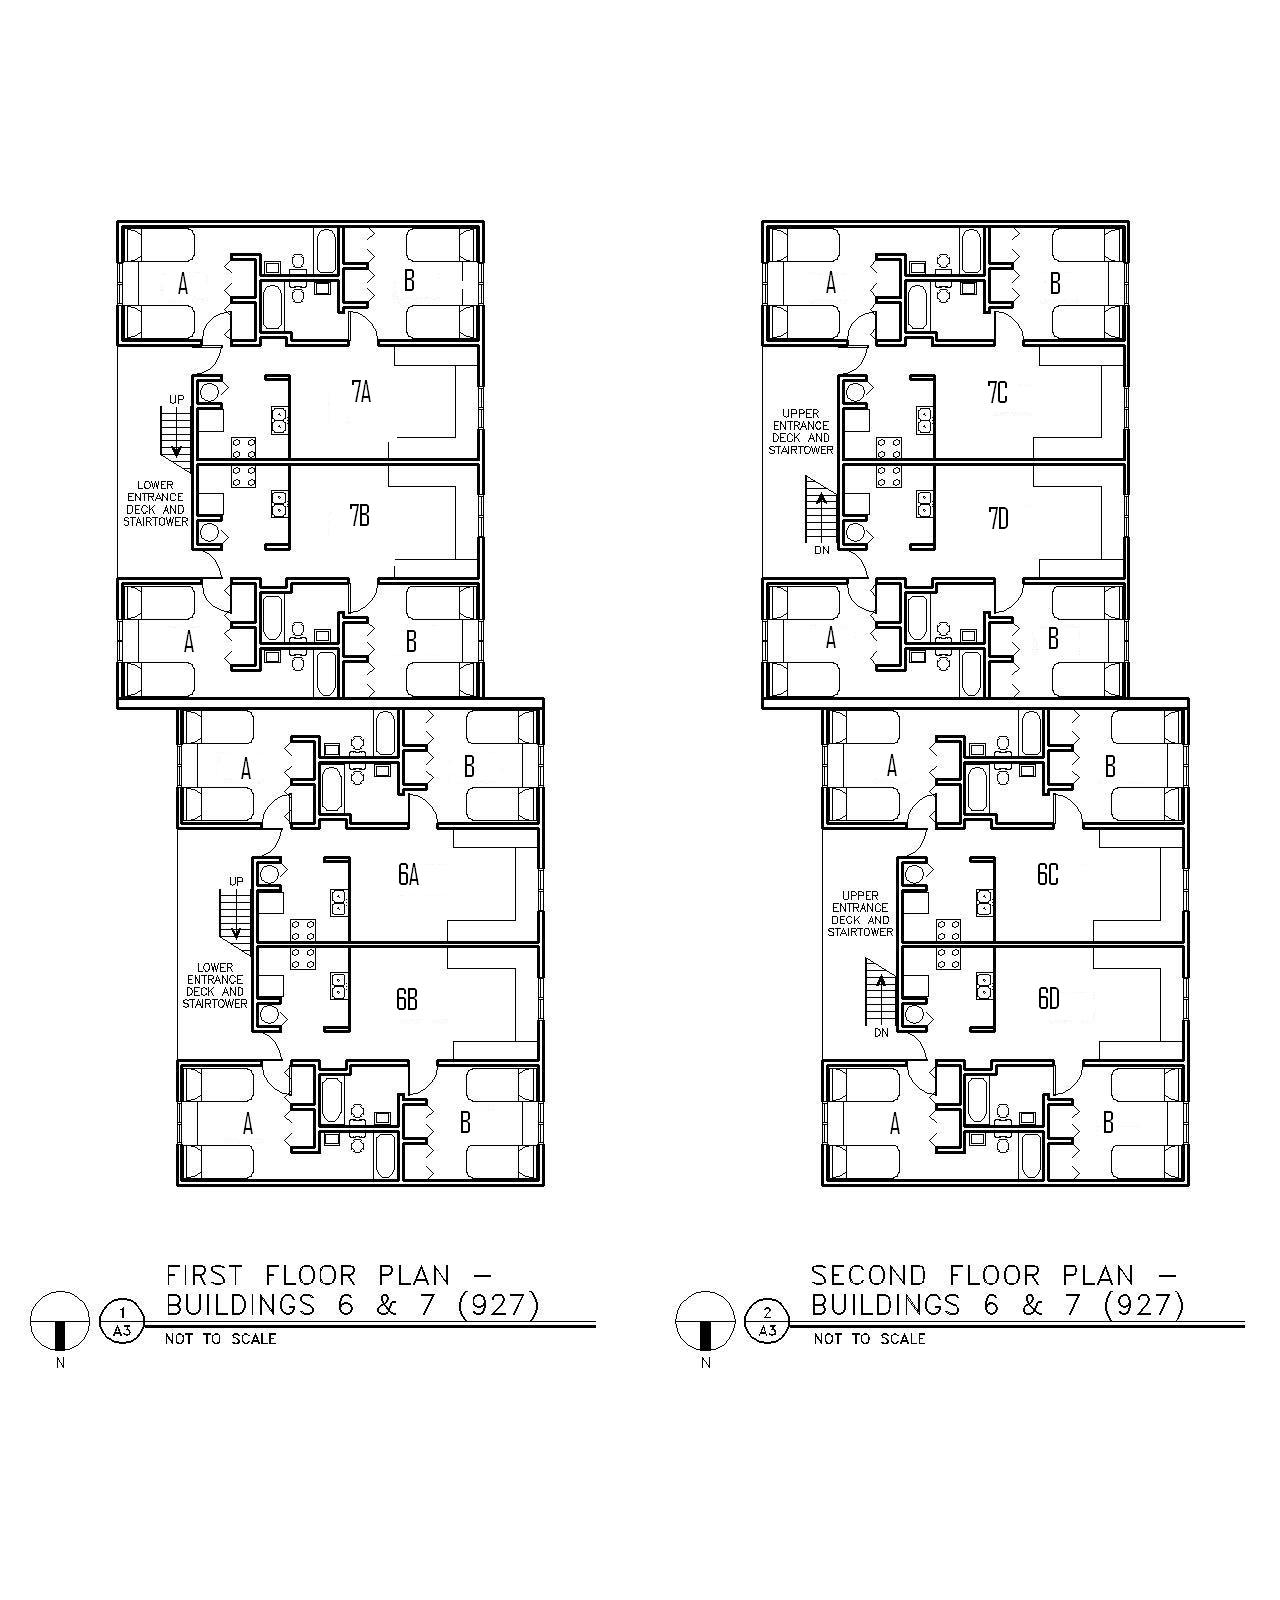 Floor Plan for Buildings 6 & 7